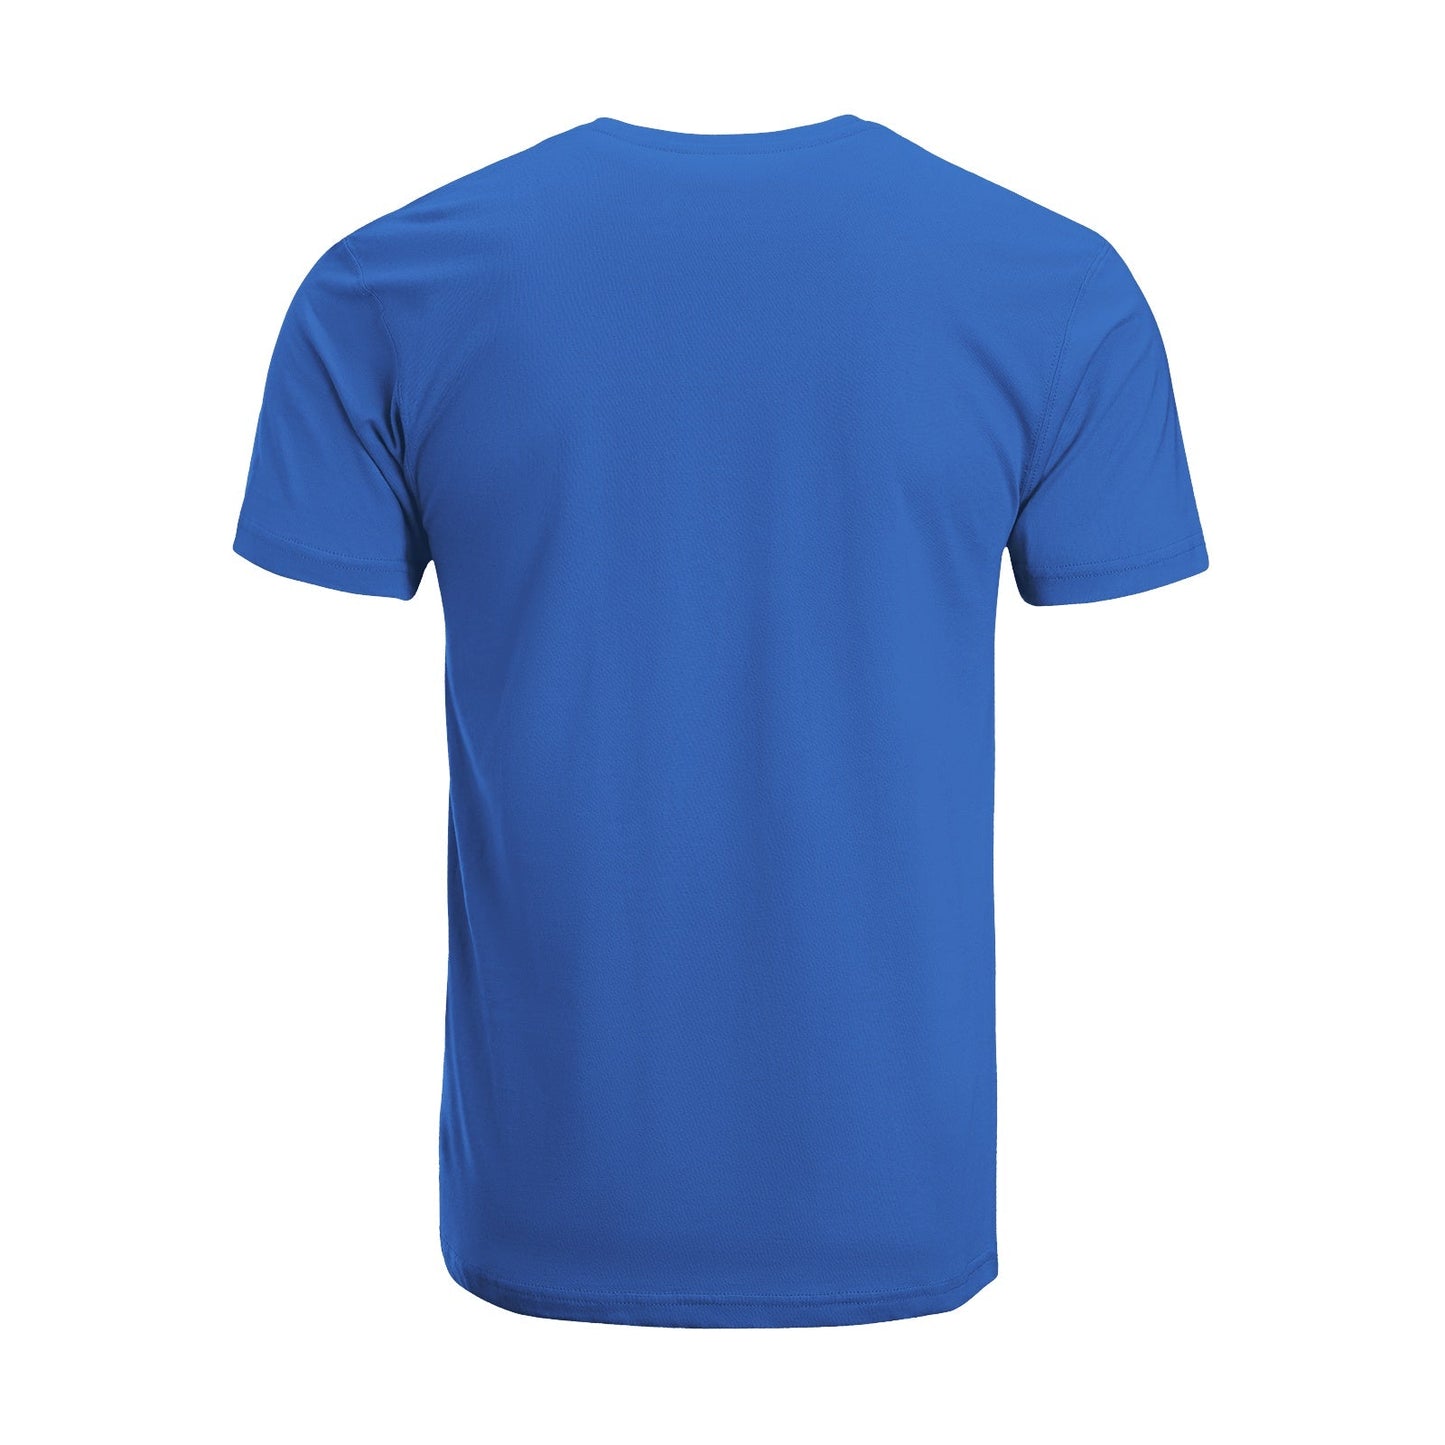 Unisex Short Sleeve Crew Neck Cotton Jersey T-Shirt Gym No. 44 - Tara-Outfits.com